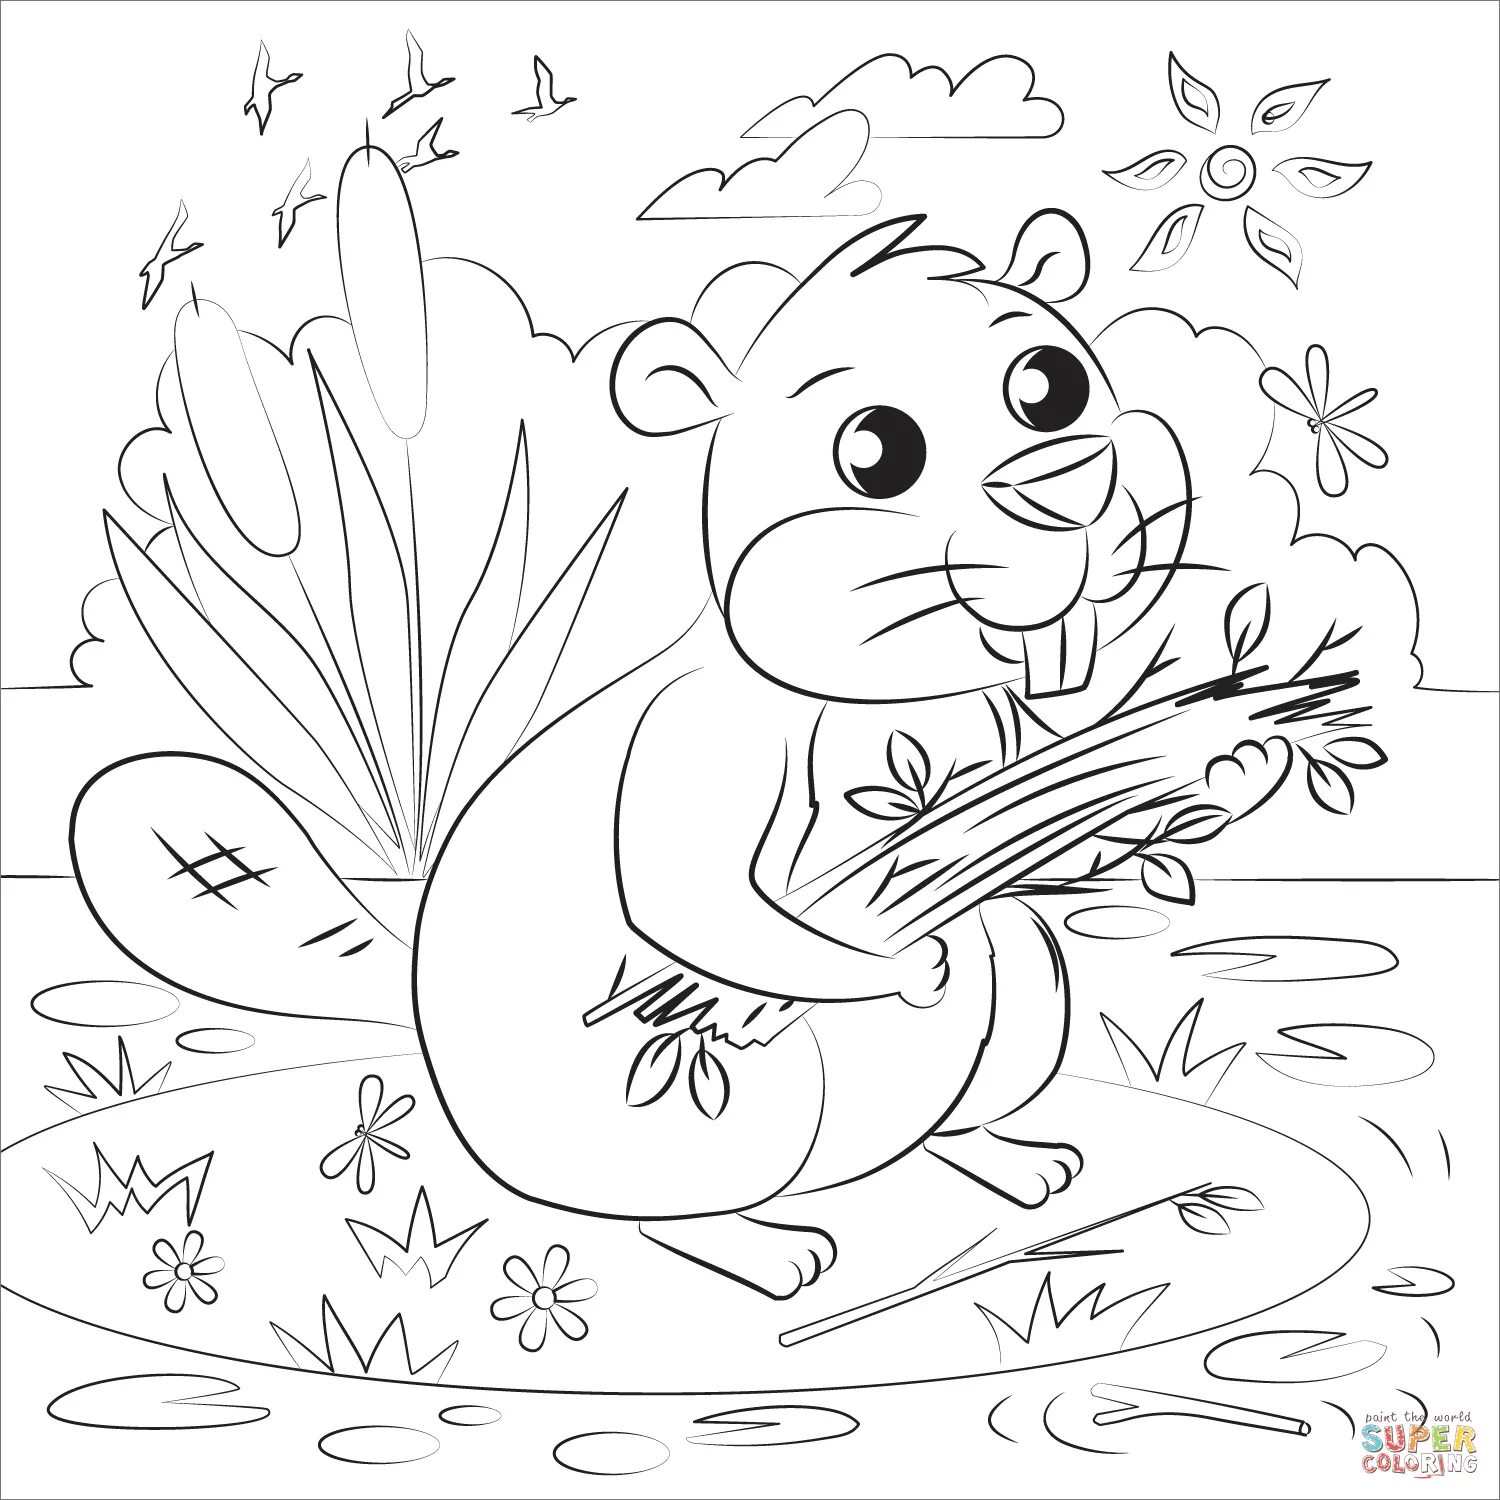 Fancy beaver coloring